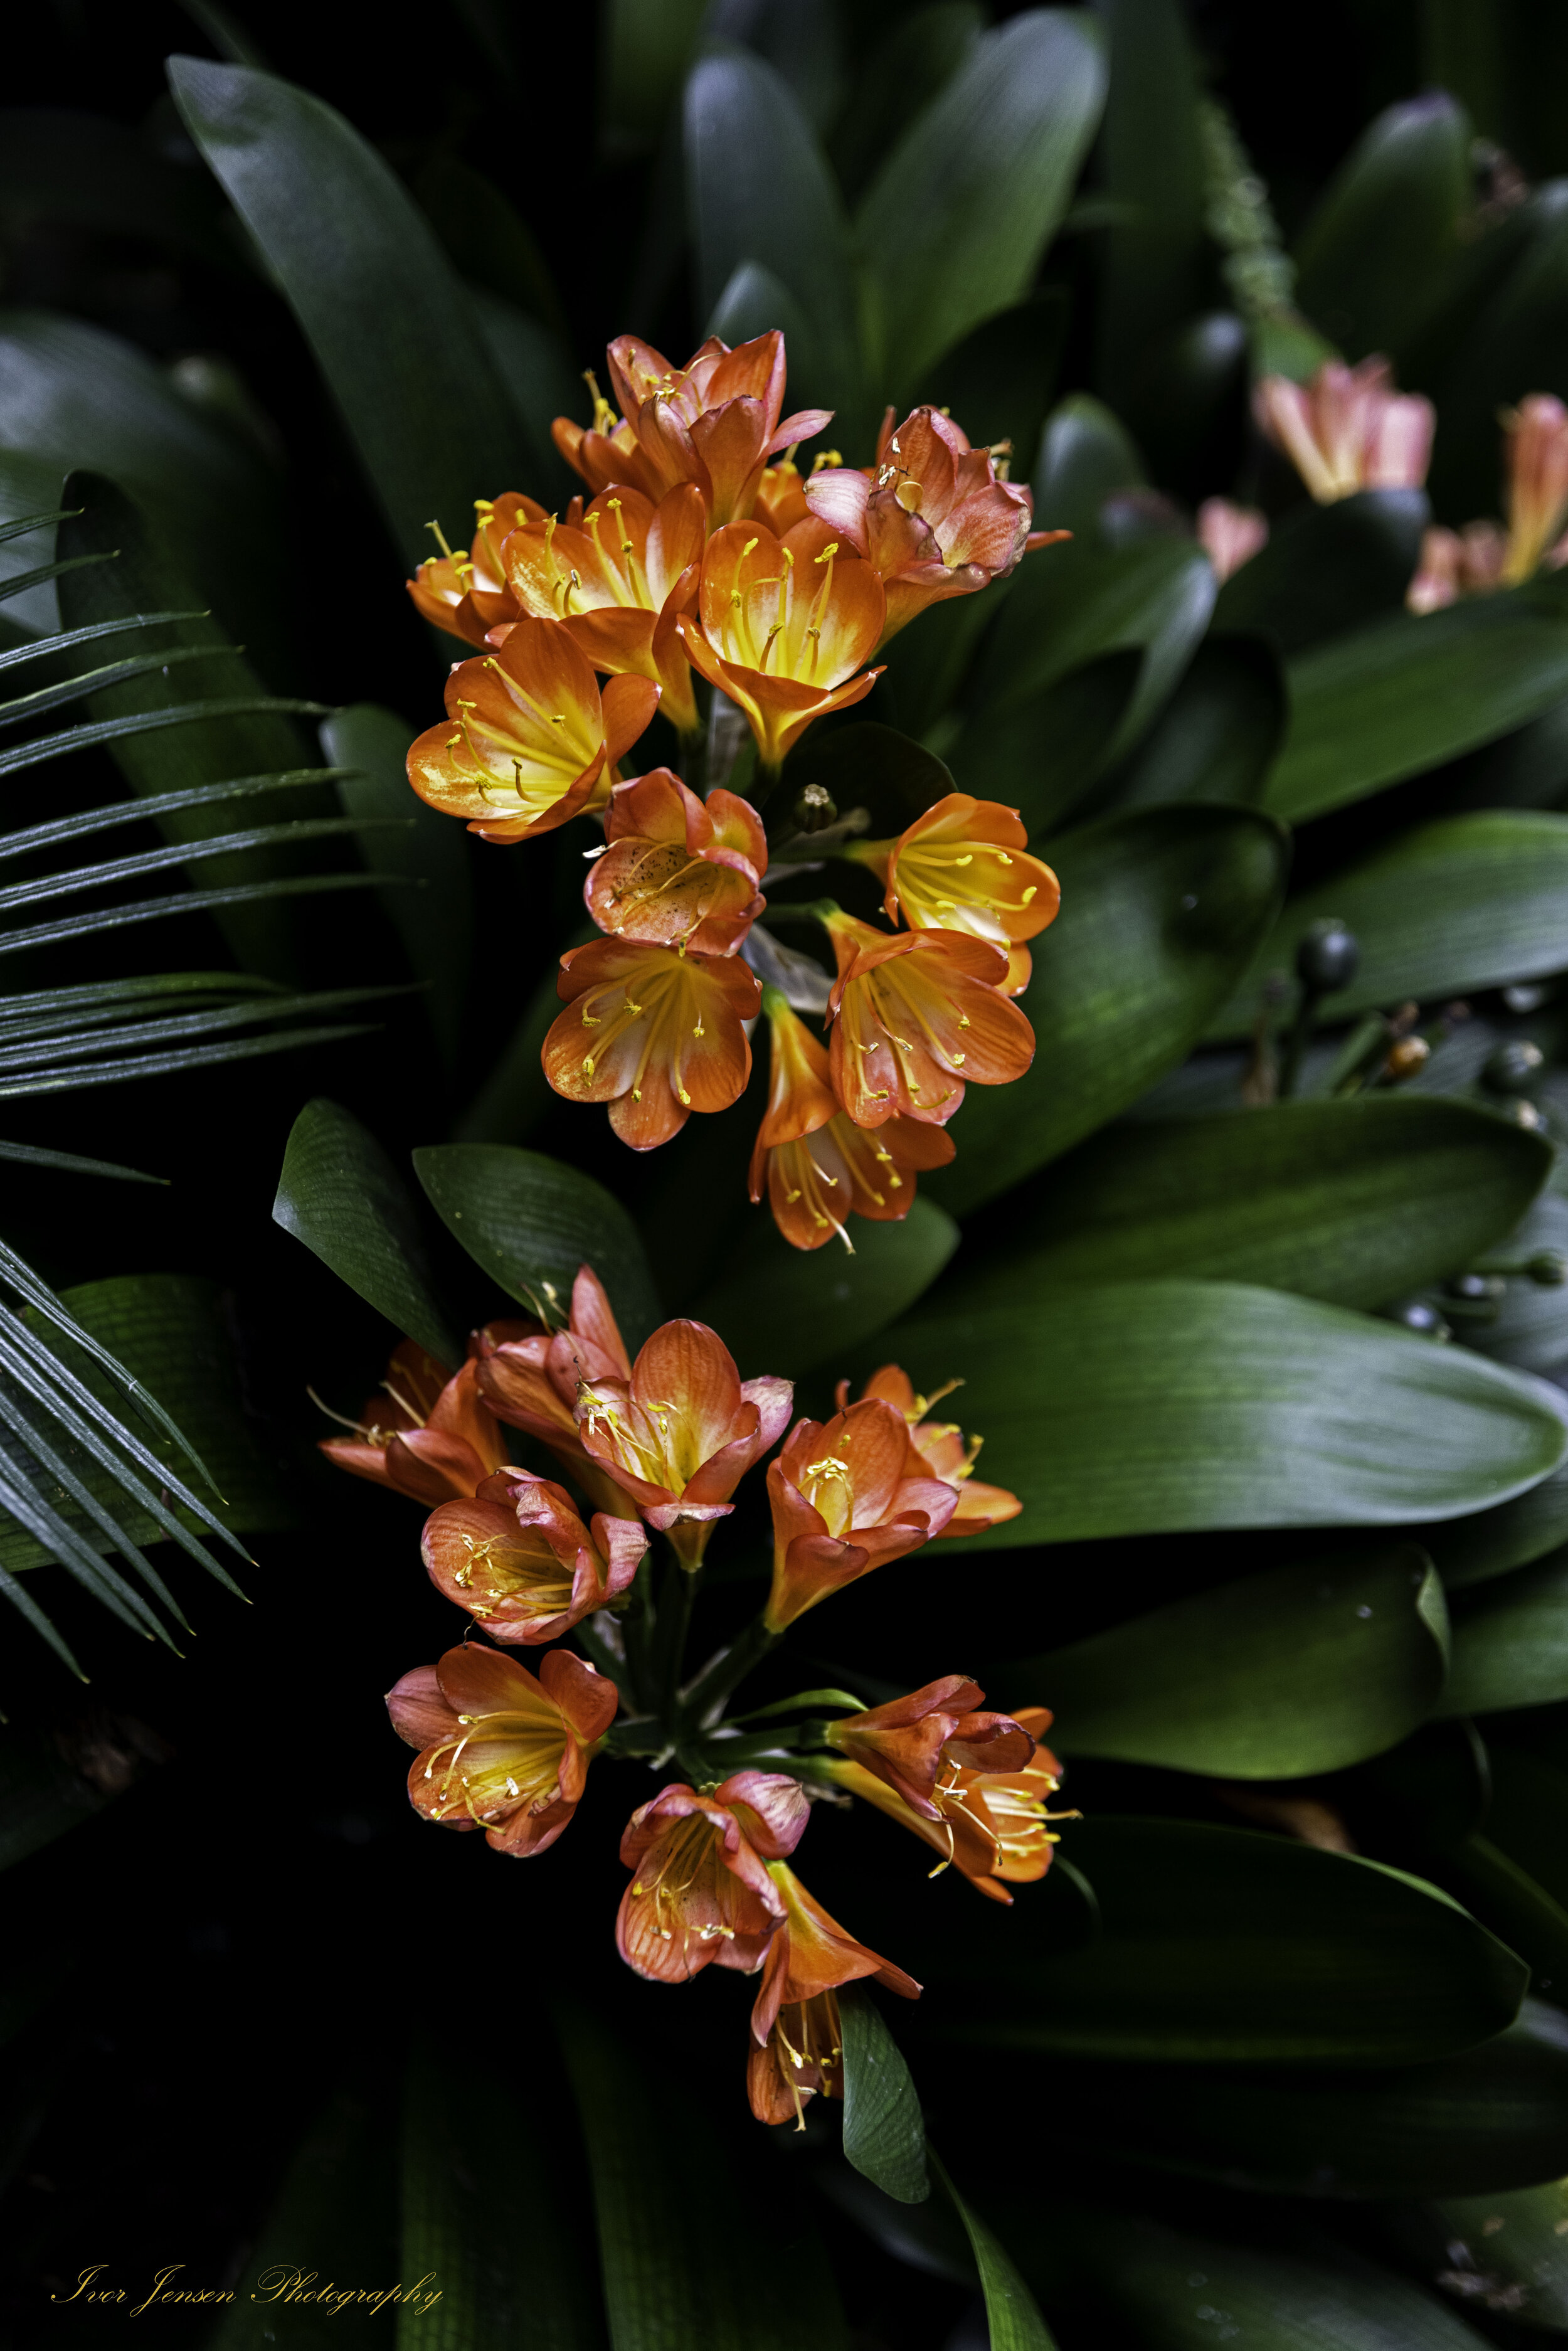 Cool Flower 1 Sendall Garden Langley-Edit.jpg